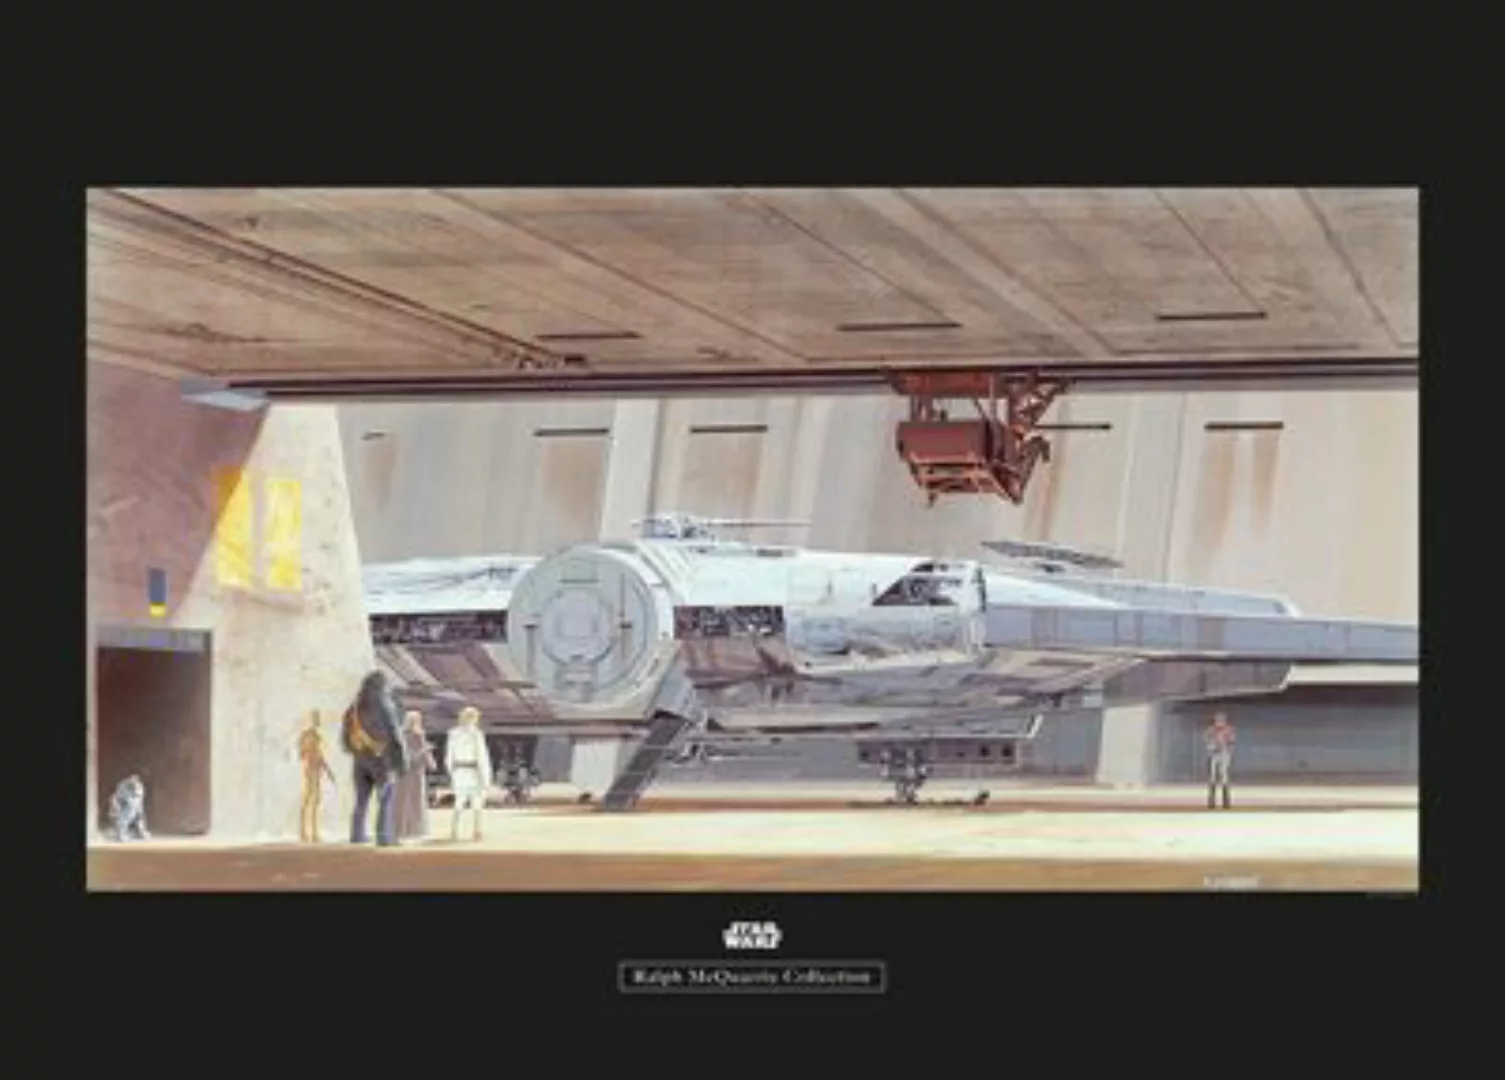 KOMAR Wandbild - Star Wars Classic RMQ Mos Eisley Hangar - Größe: 70 x 50 c günstig online kaufen